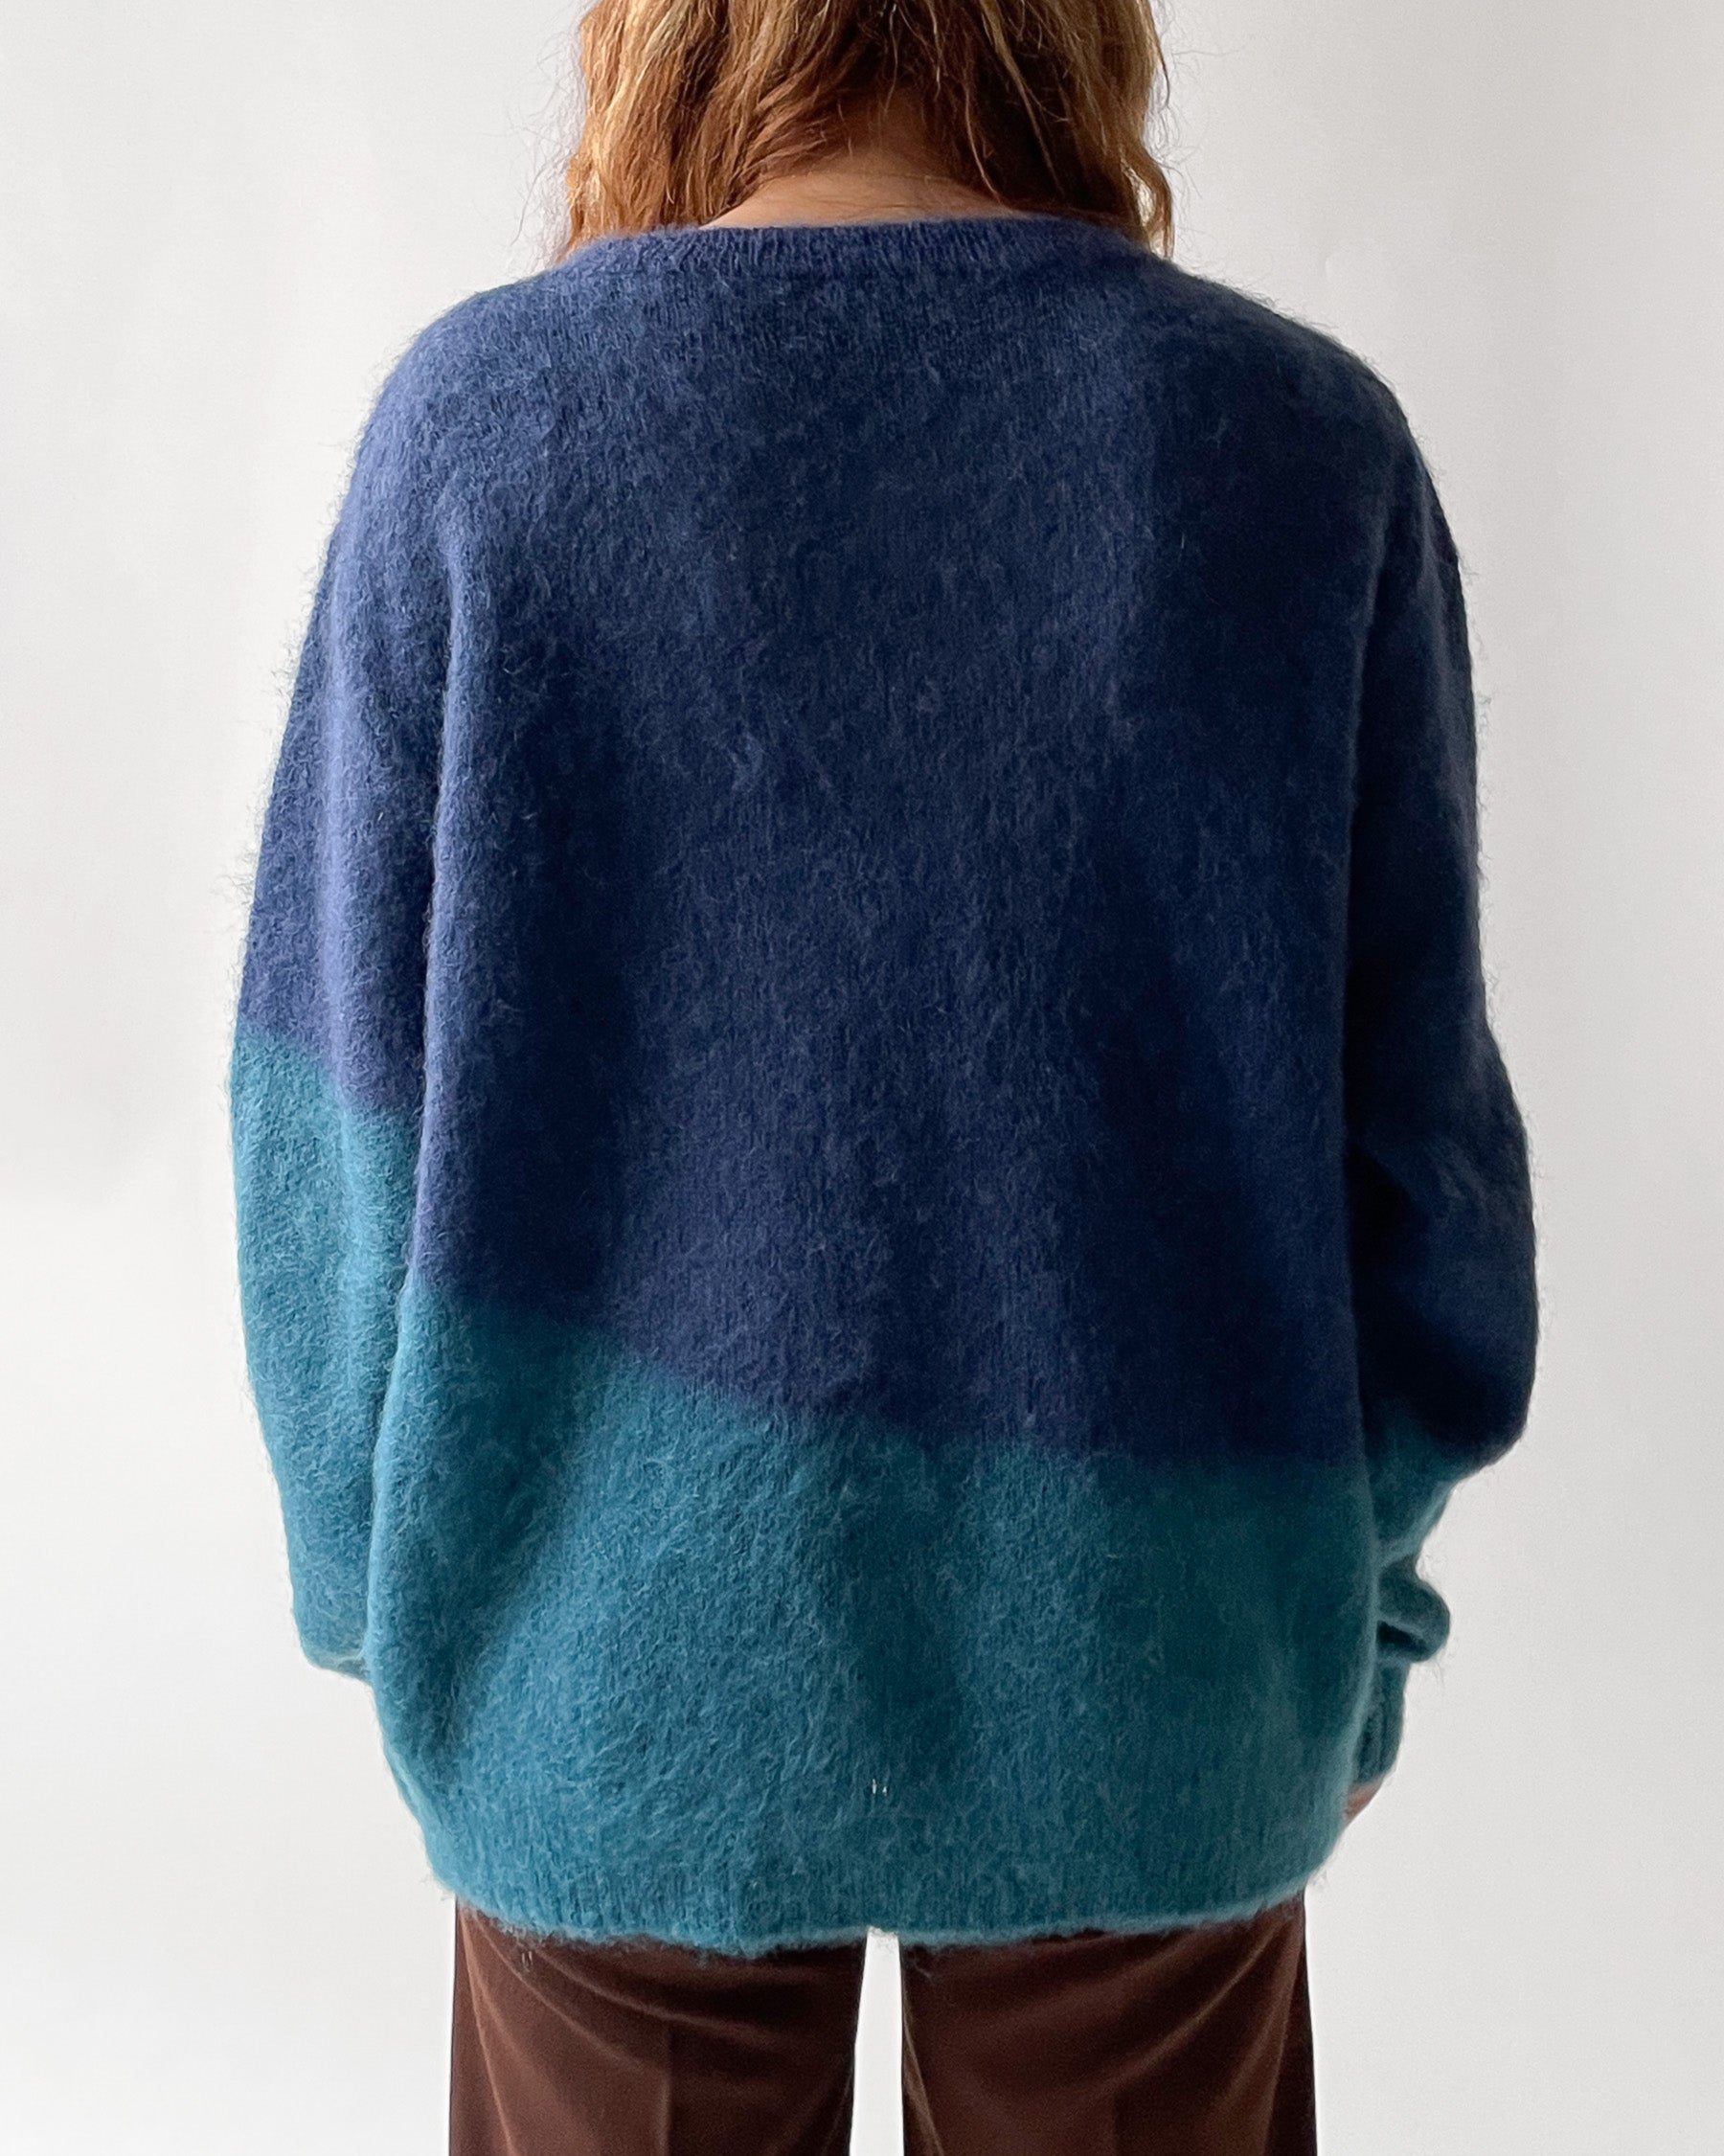 studiolab404.com] Art Inspired Mohair Sweater Unaltd - 1